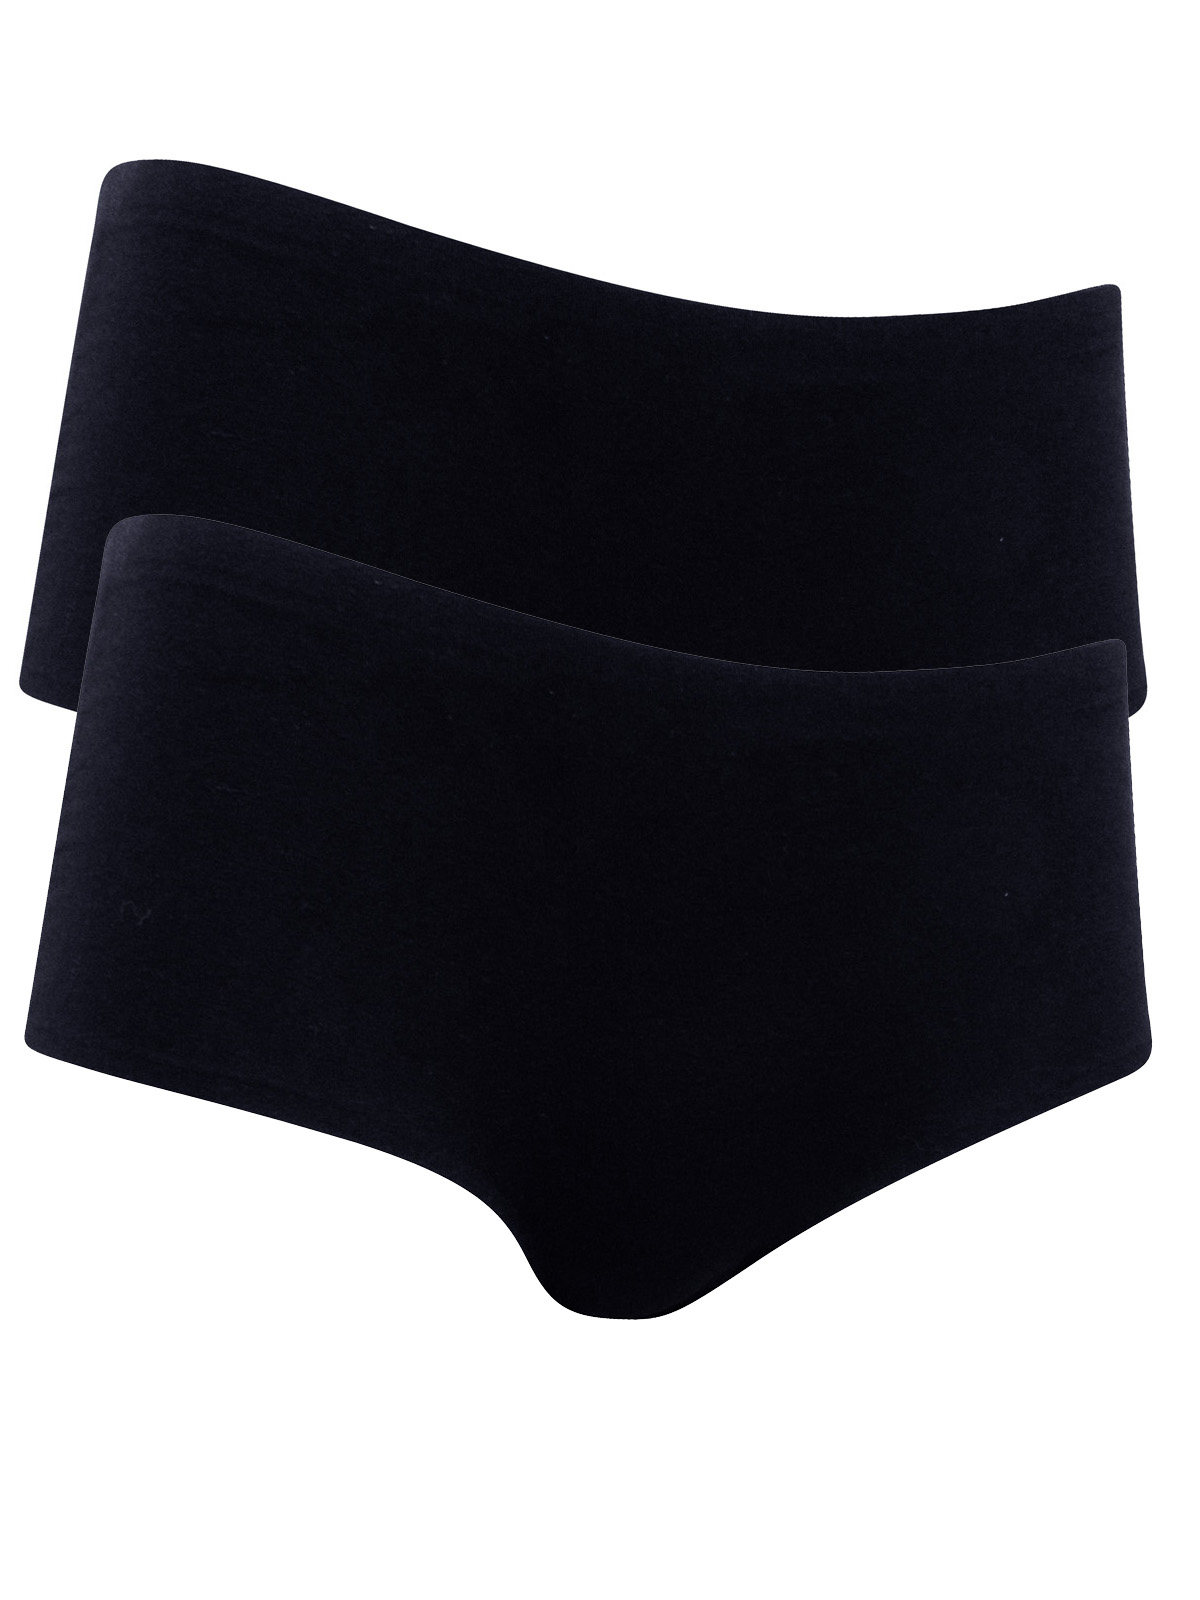 A Medium X-Large Large TROFE Ladies Hipster Briefs Panties Black Small